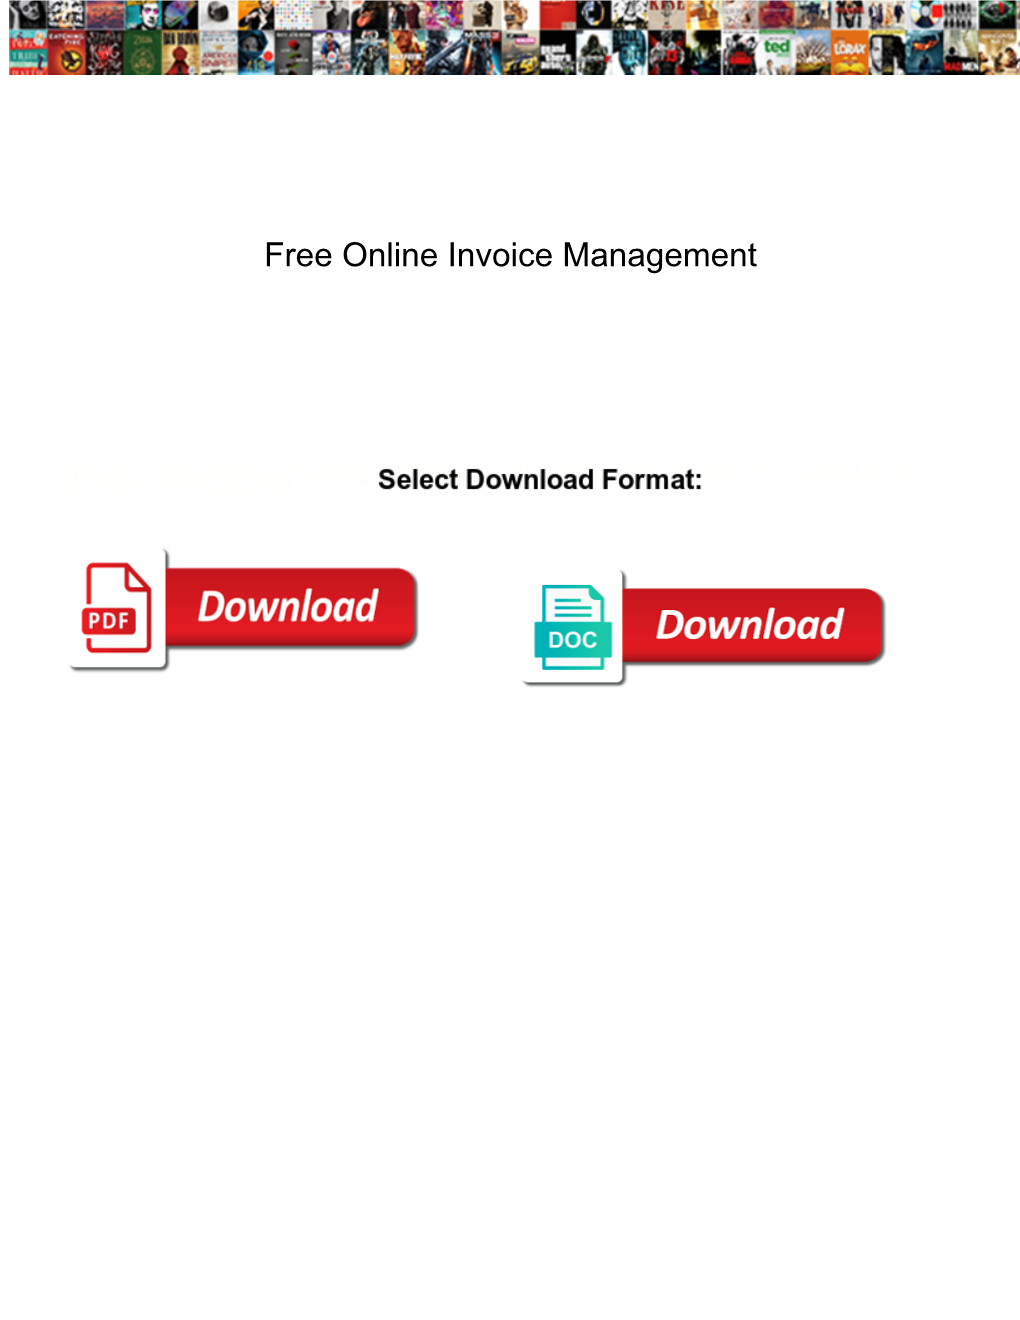 Free Online Invoice Management